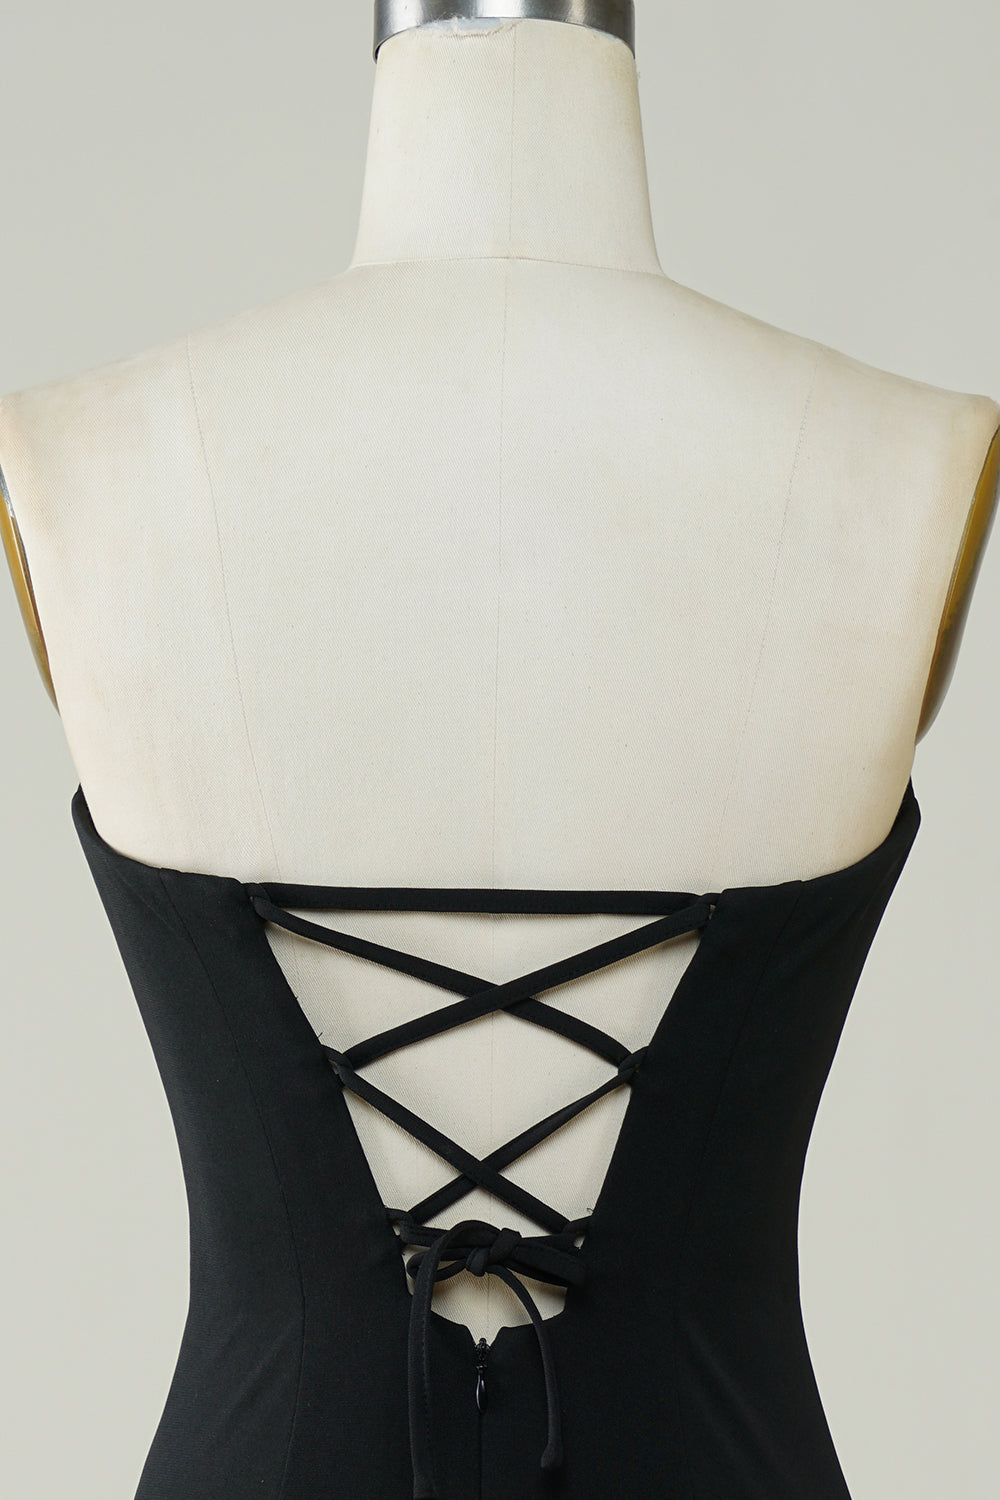 Stylish Sheath Strapless Black Short Homecoming Dress with Tassel